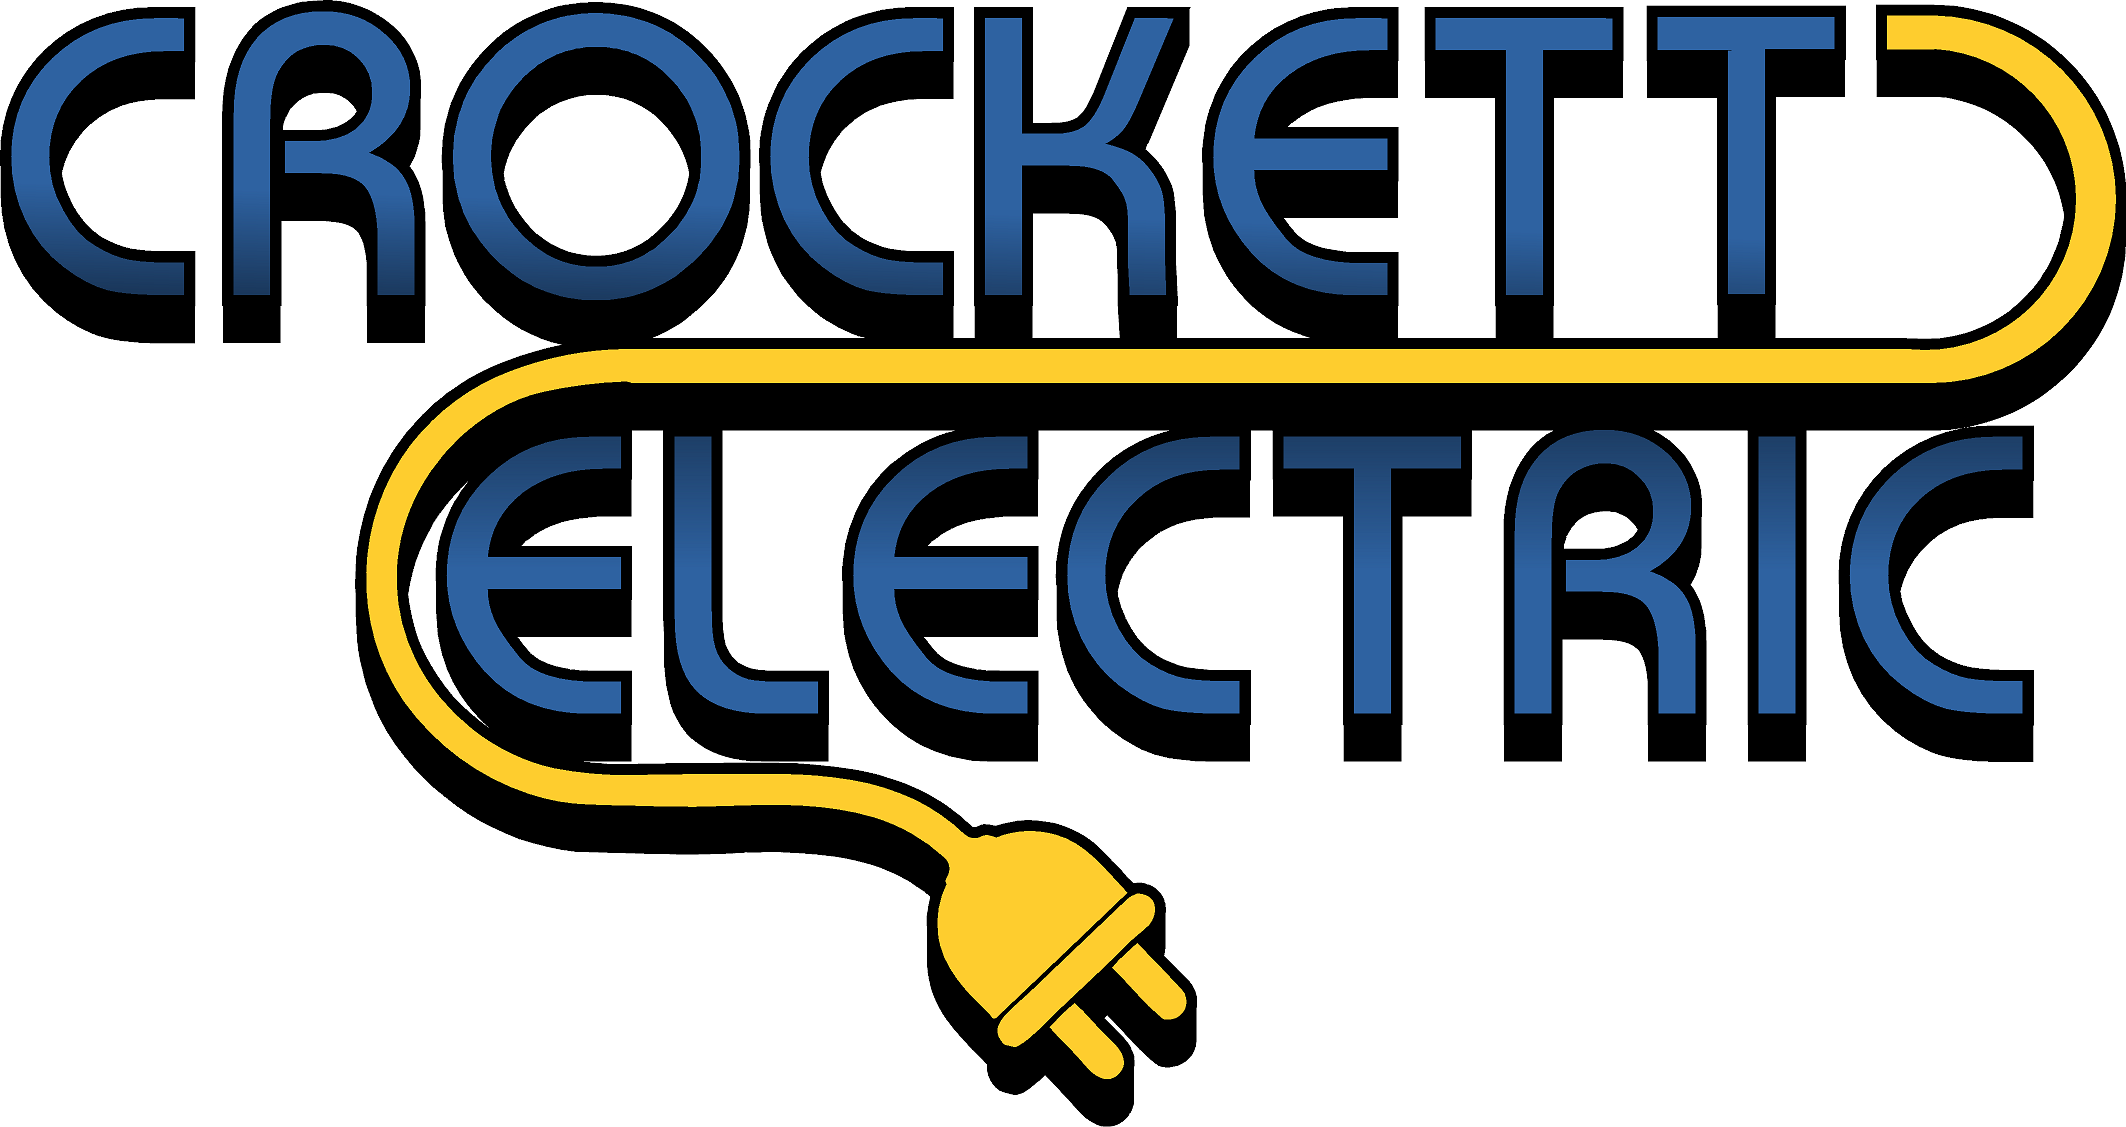 Crockett Electric 